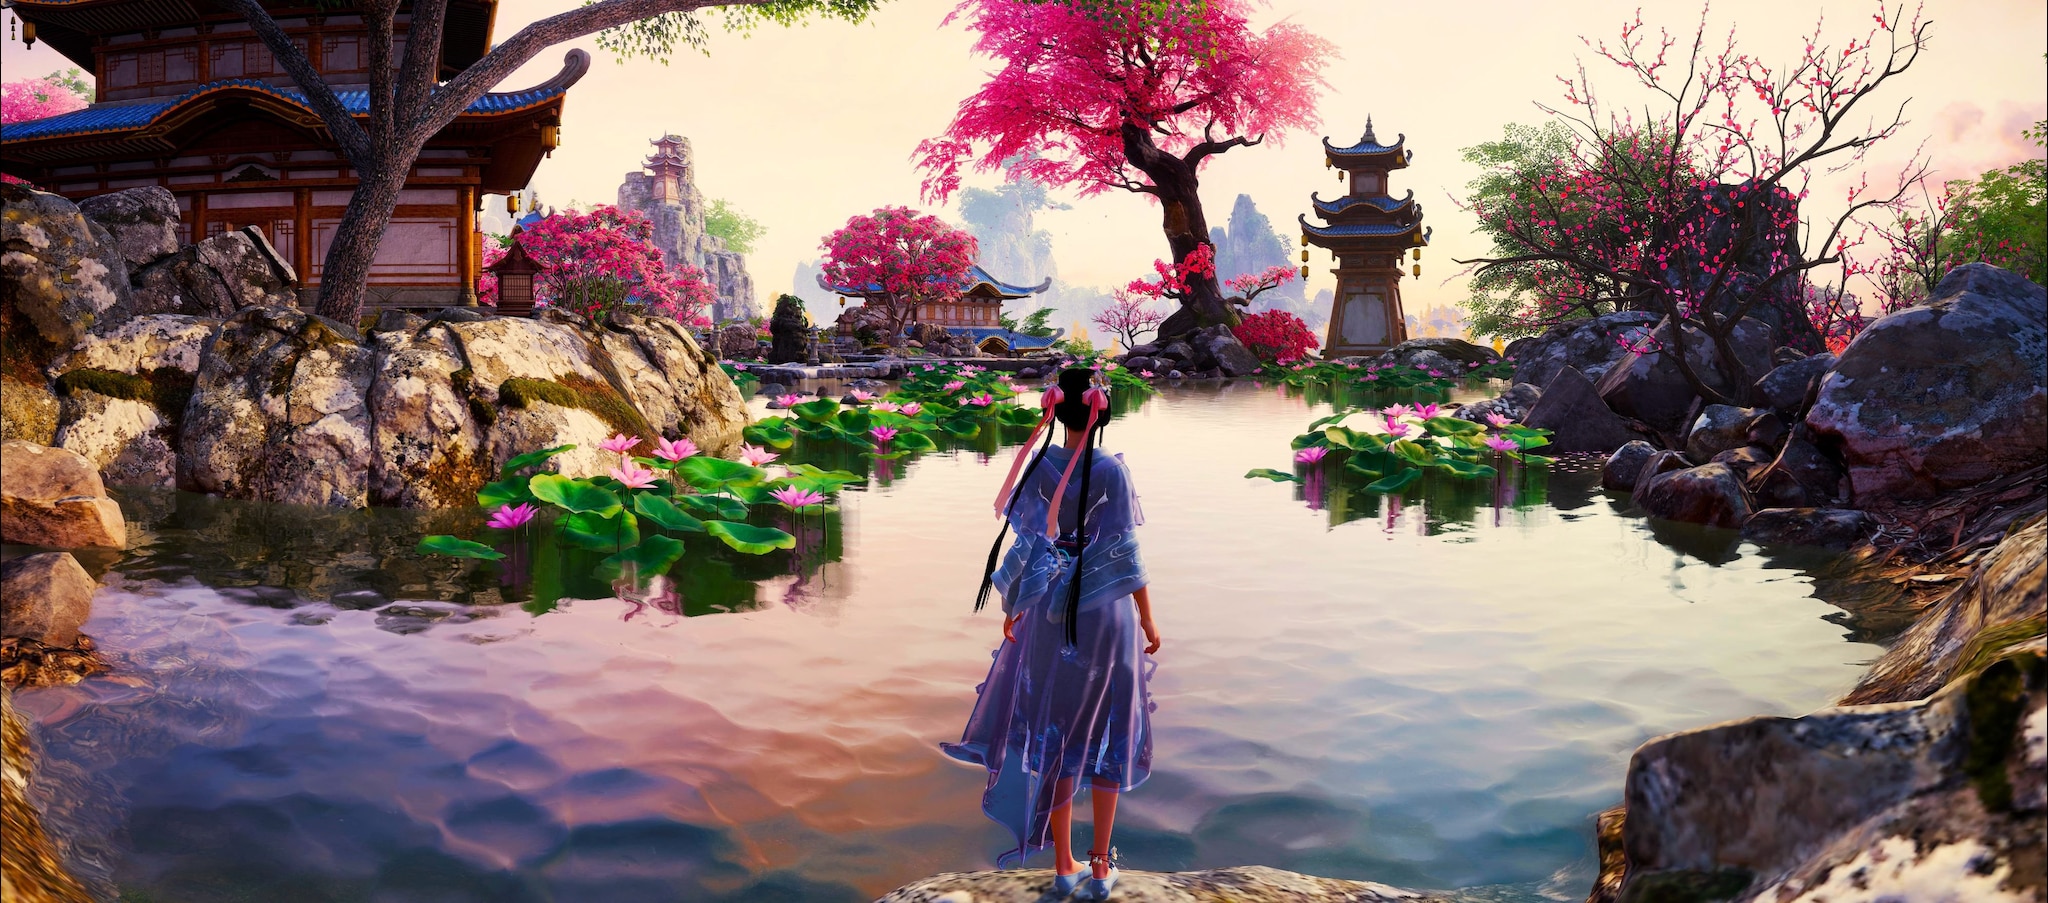 Artwork Concept Art Digital Art Sword And Fairy 7 Trees Pond Plants Rocks Video Game Girls 2048x903